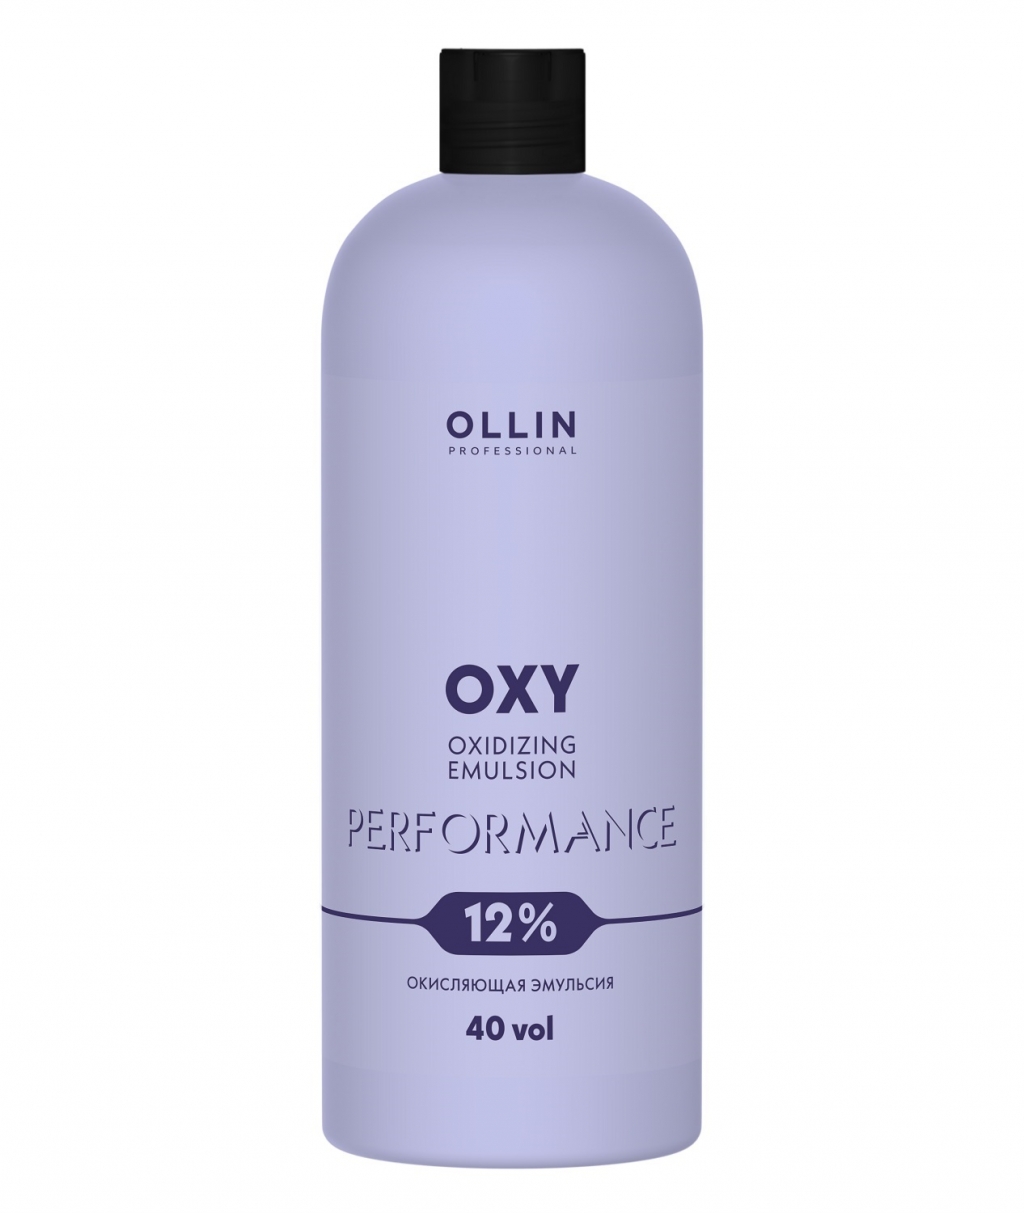 Ollin Professional Окисляющая эмульсия performance OXY 12% 40vol., 1000 мл (Ollin Professional, Окрашивание волос)